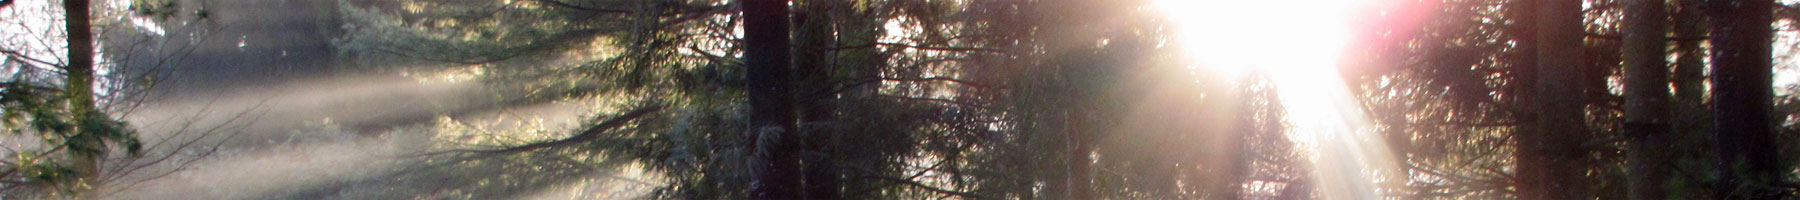 Light streaming through pine trees